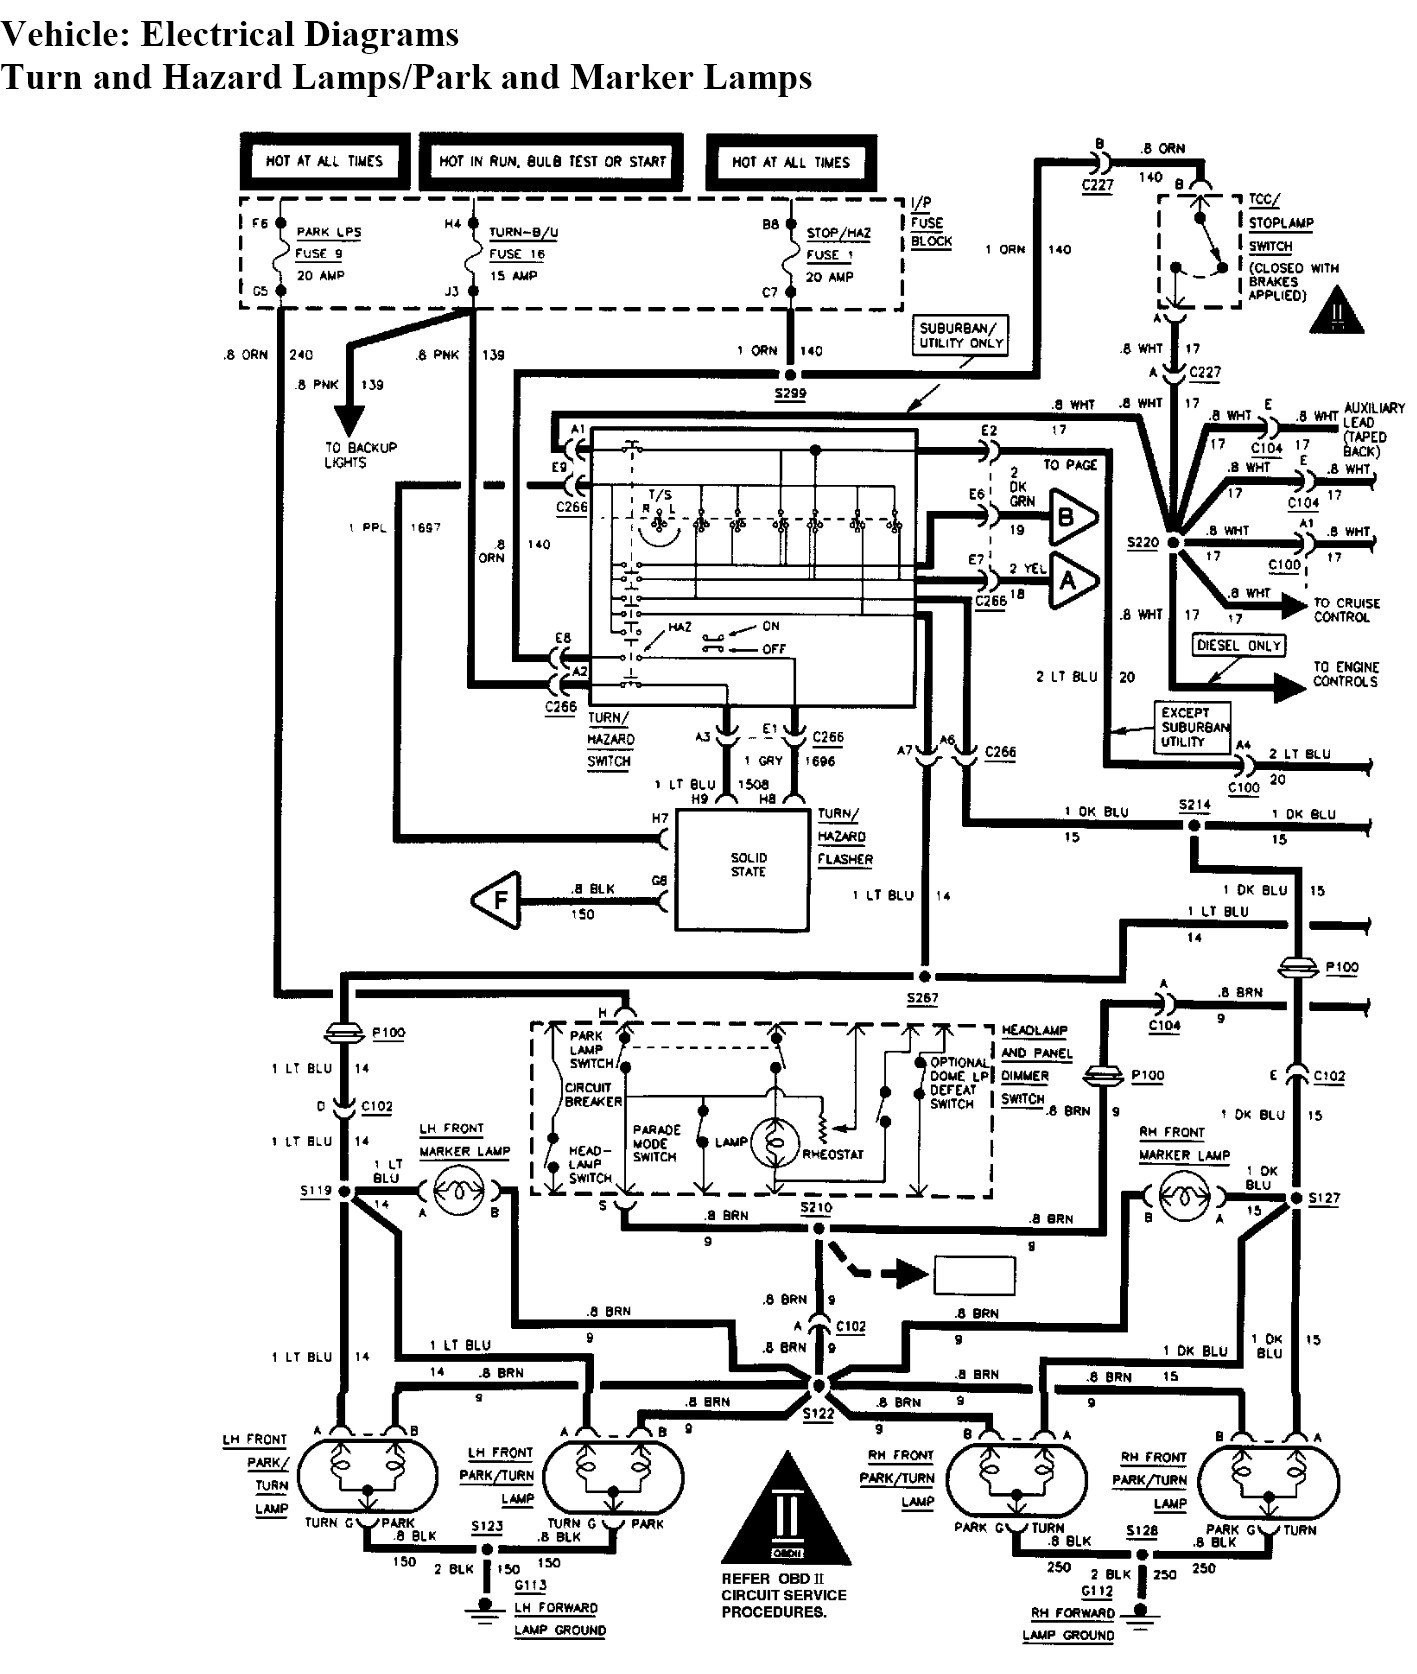 2004 Chevy Trailblazer Engine Diagram Chevy Trailblazer Tail Light Diagram Wiring Diagram Rows Of 2004 Chevy Trailblazer Engine Diagram